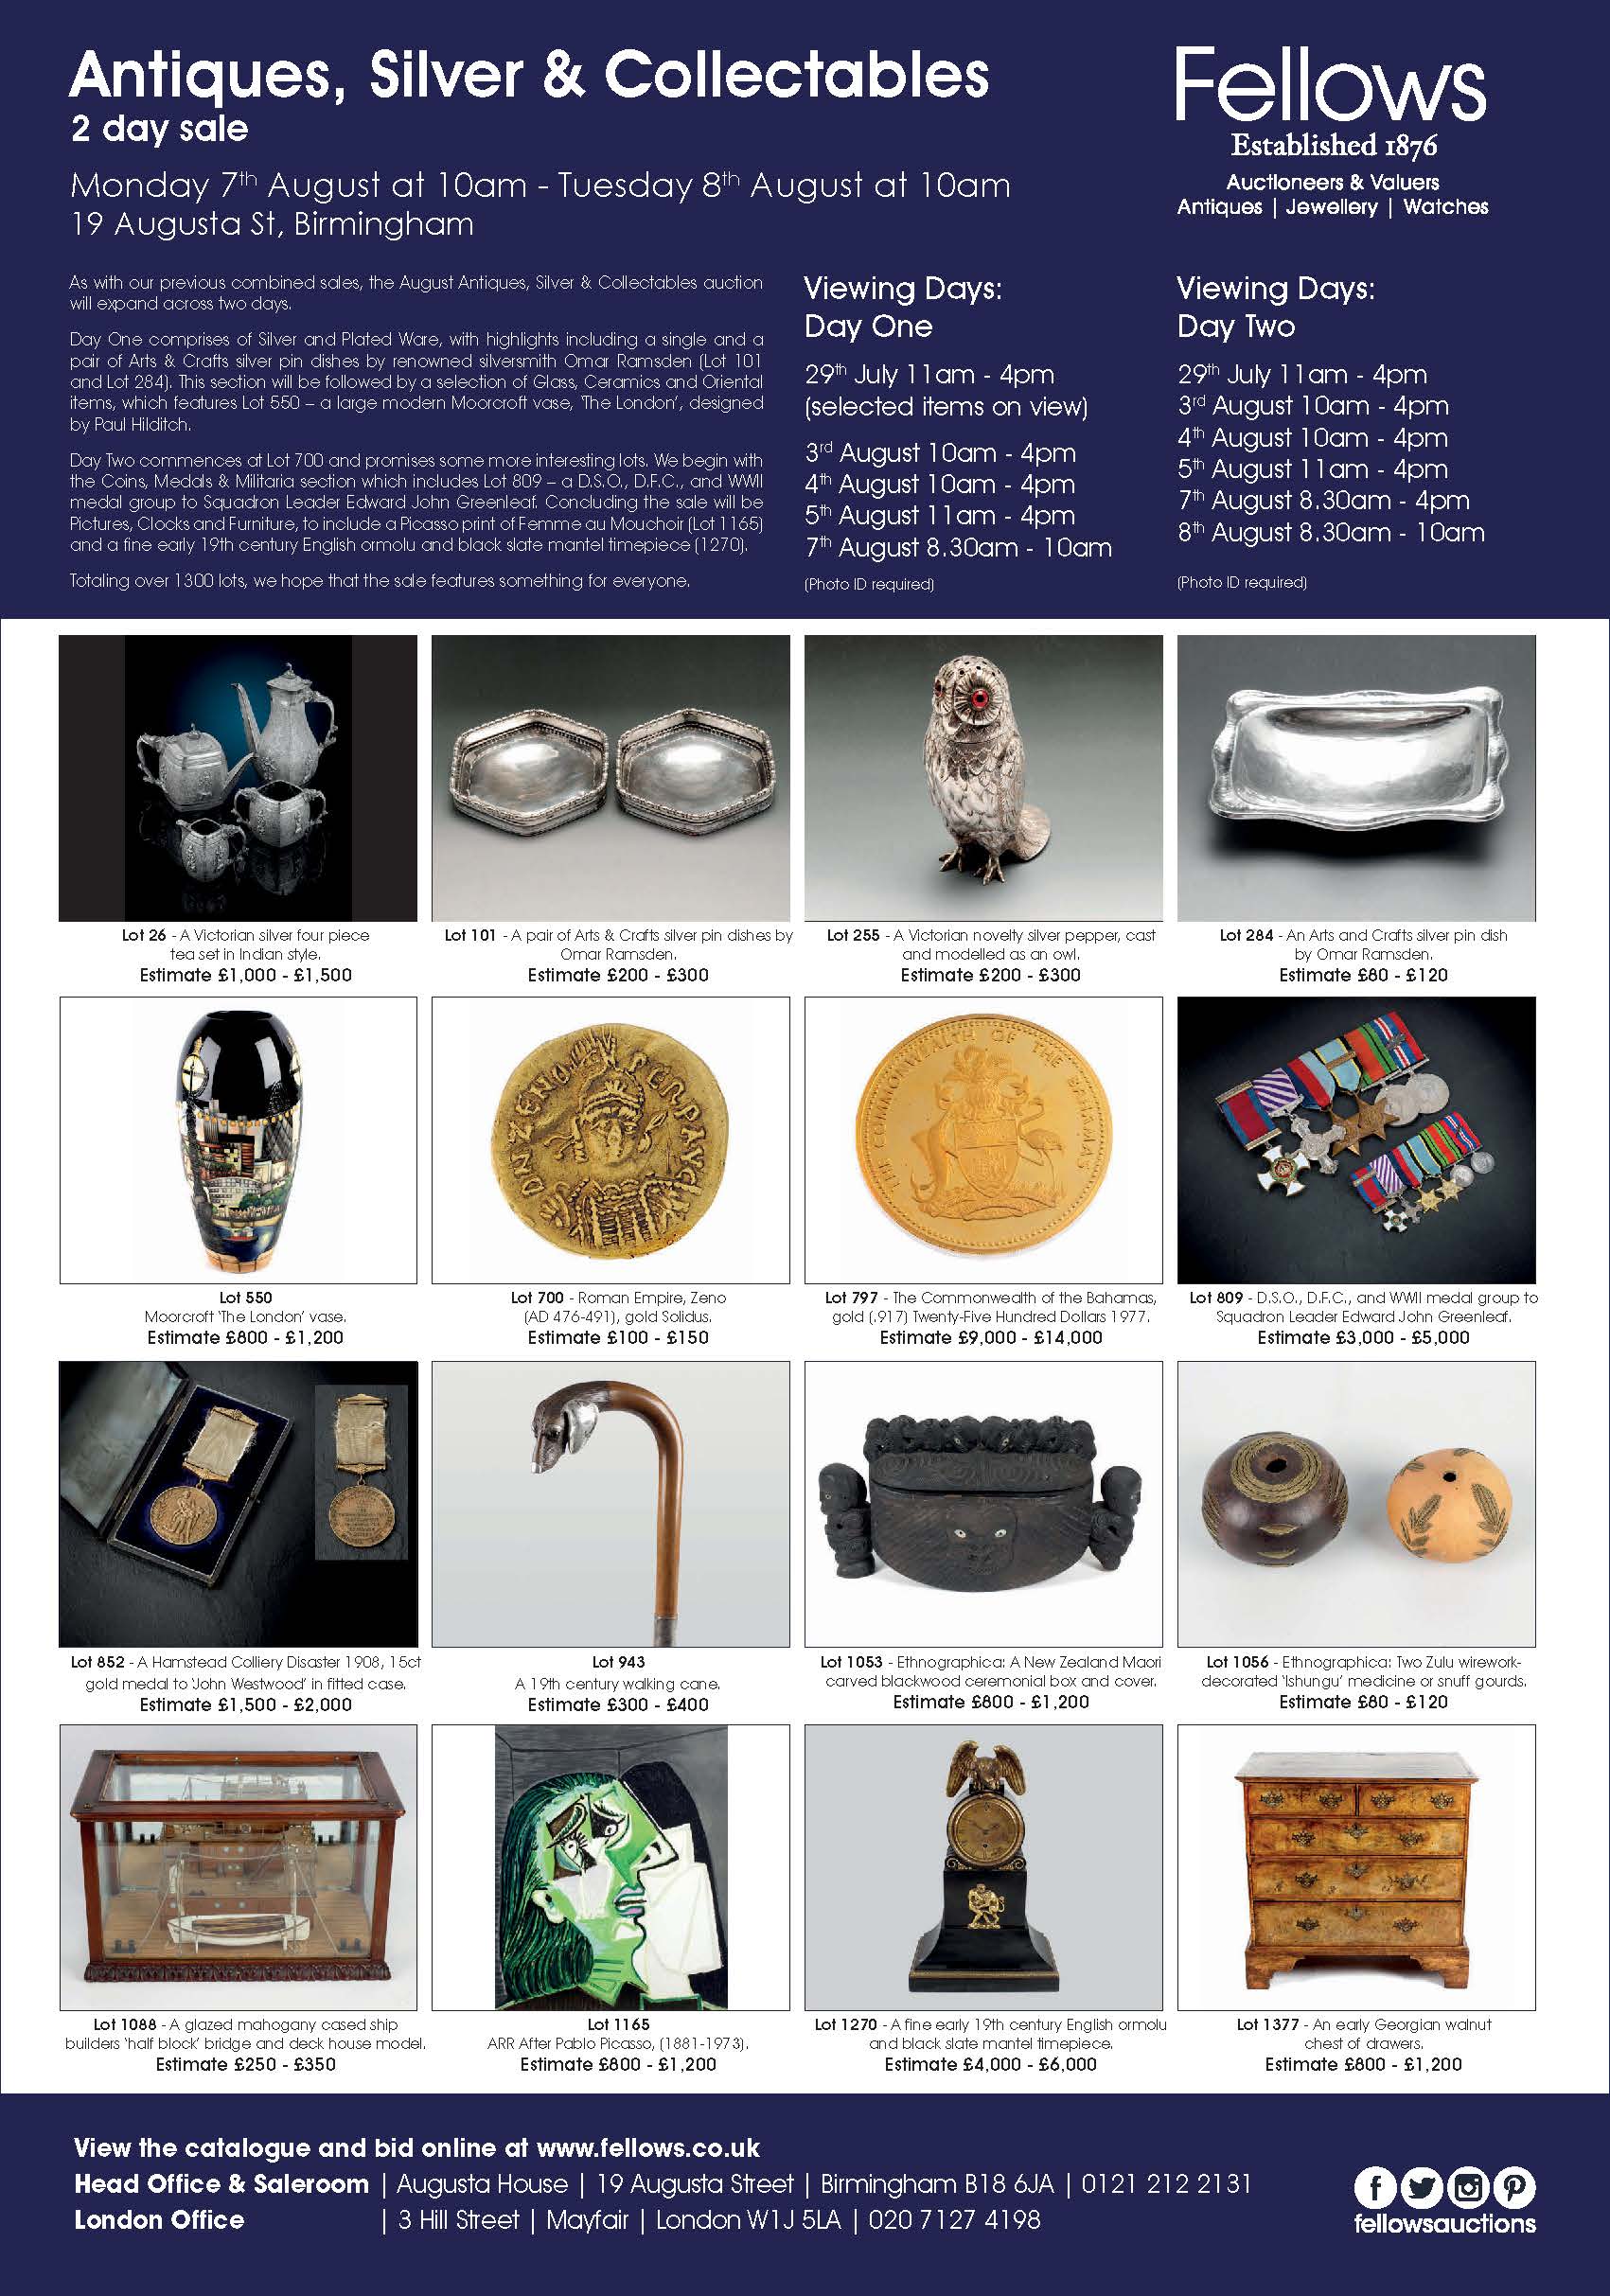 Fellows - Antiques Silver & Collectables.jpg